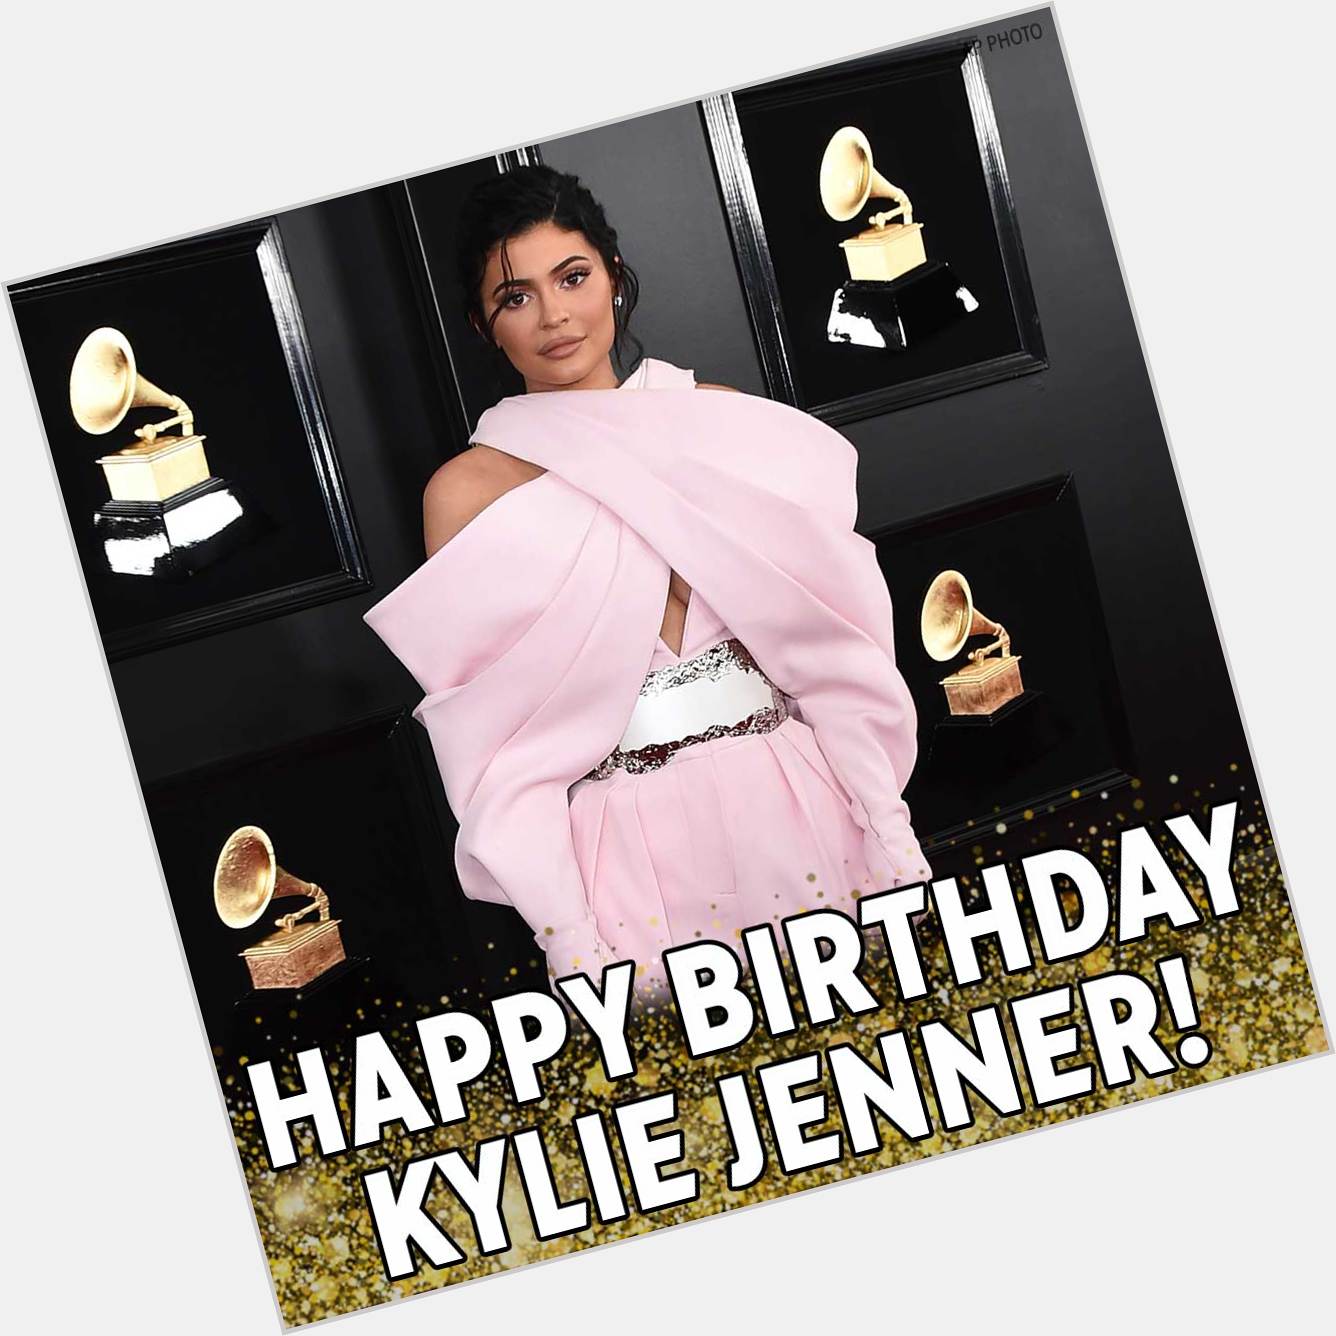 Happy Birthday, Kylie Jenner! The fashion designer, social media guru and reality TV star is celebrating. 